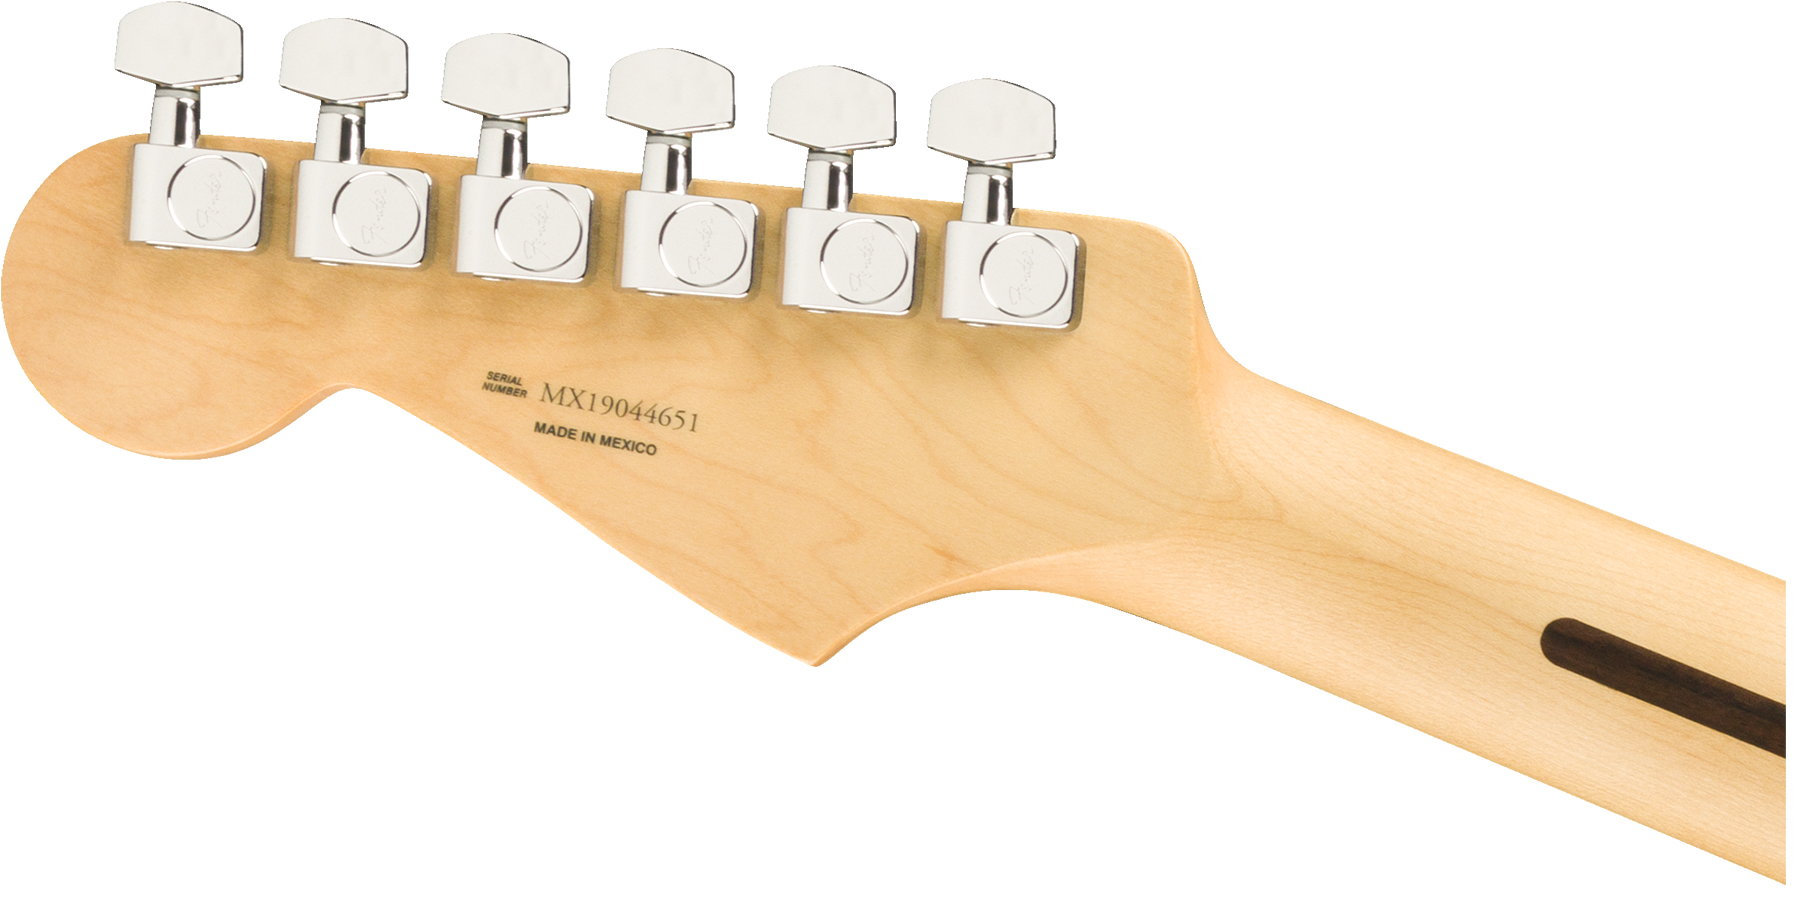 Fender Strat Player Mex Hsh Pf - Silver - Str shape electric guitar - Variation 2